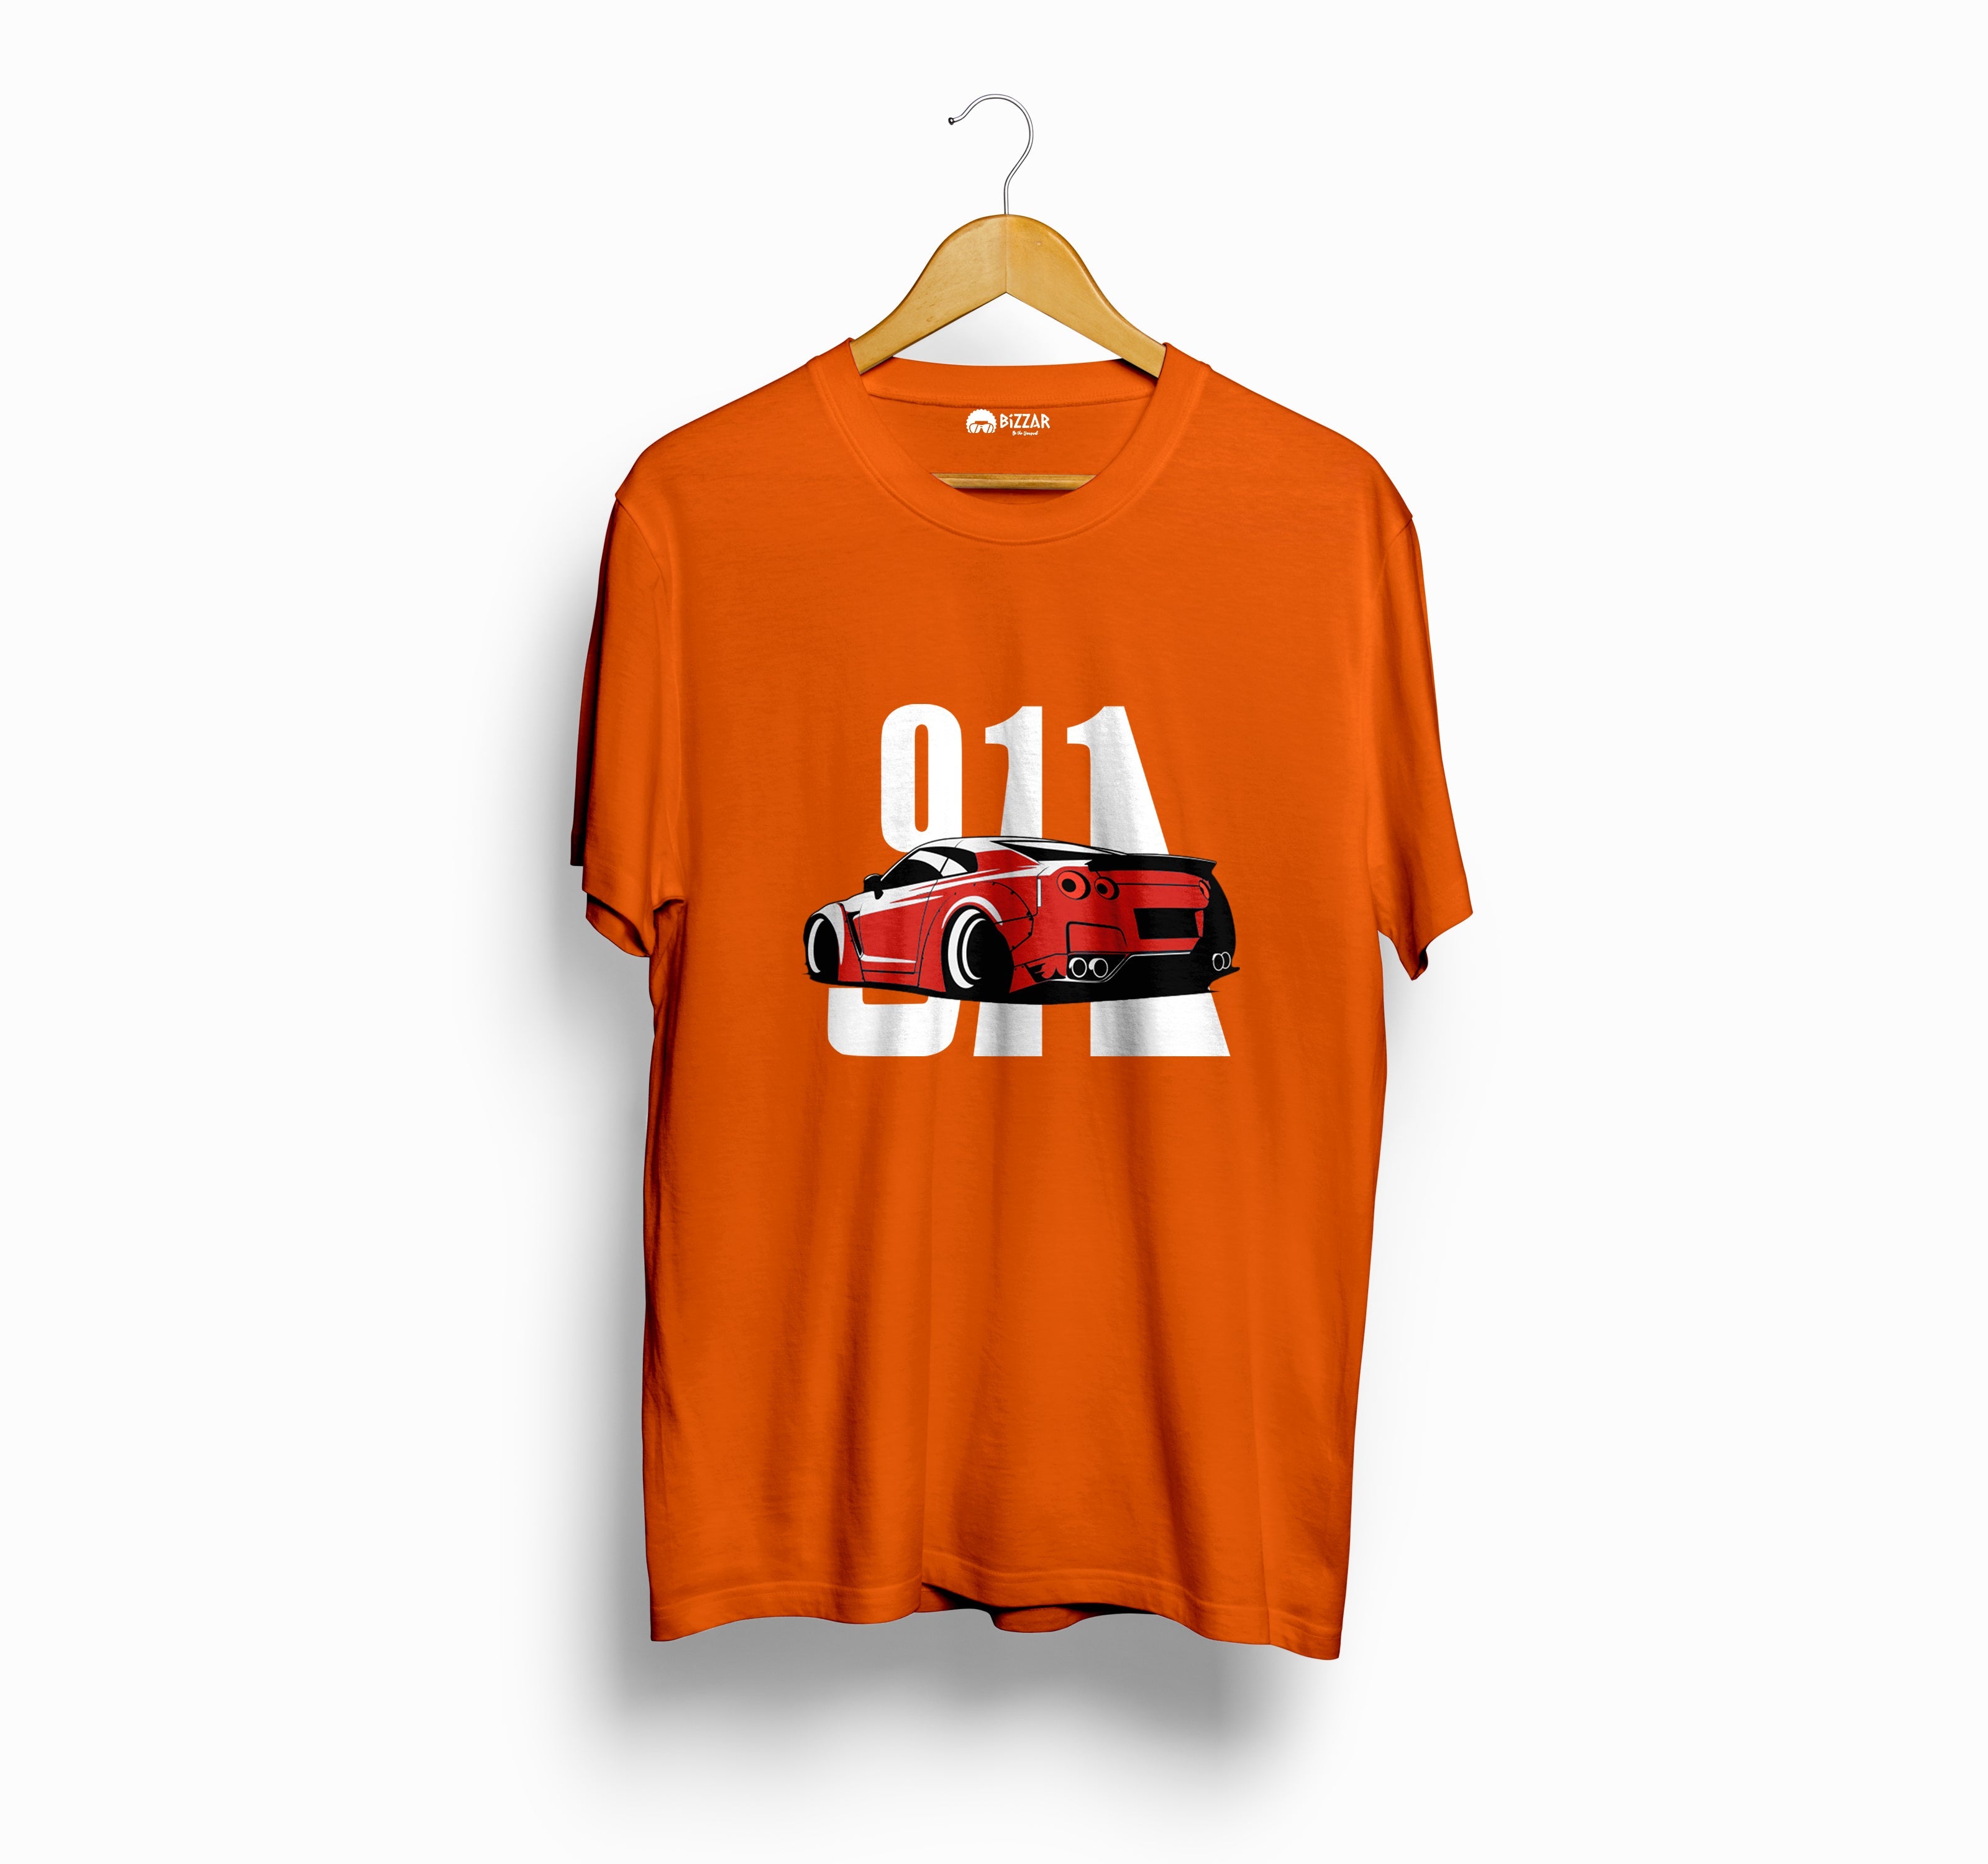 Bizzar's GTR Orange T-Shirt